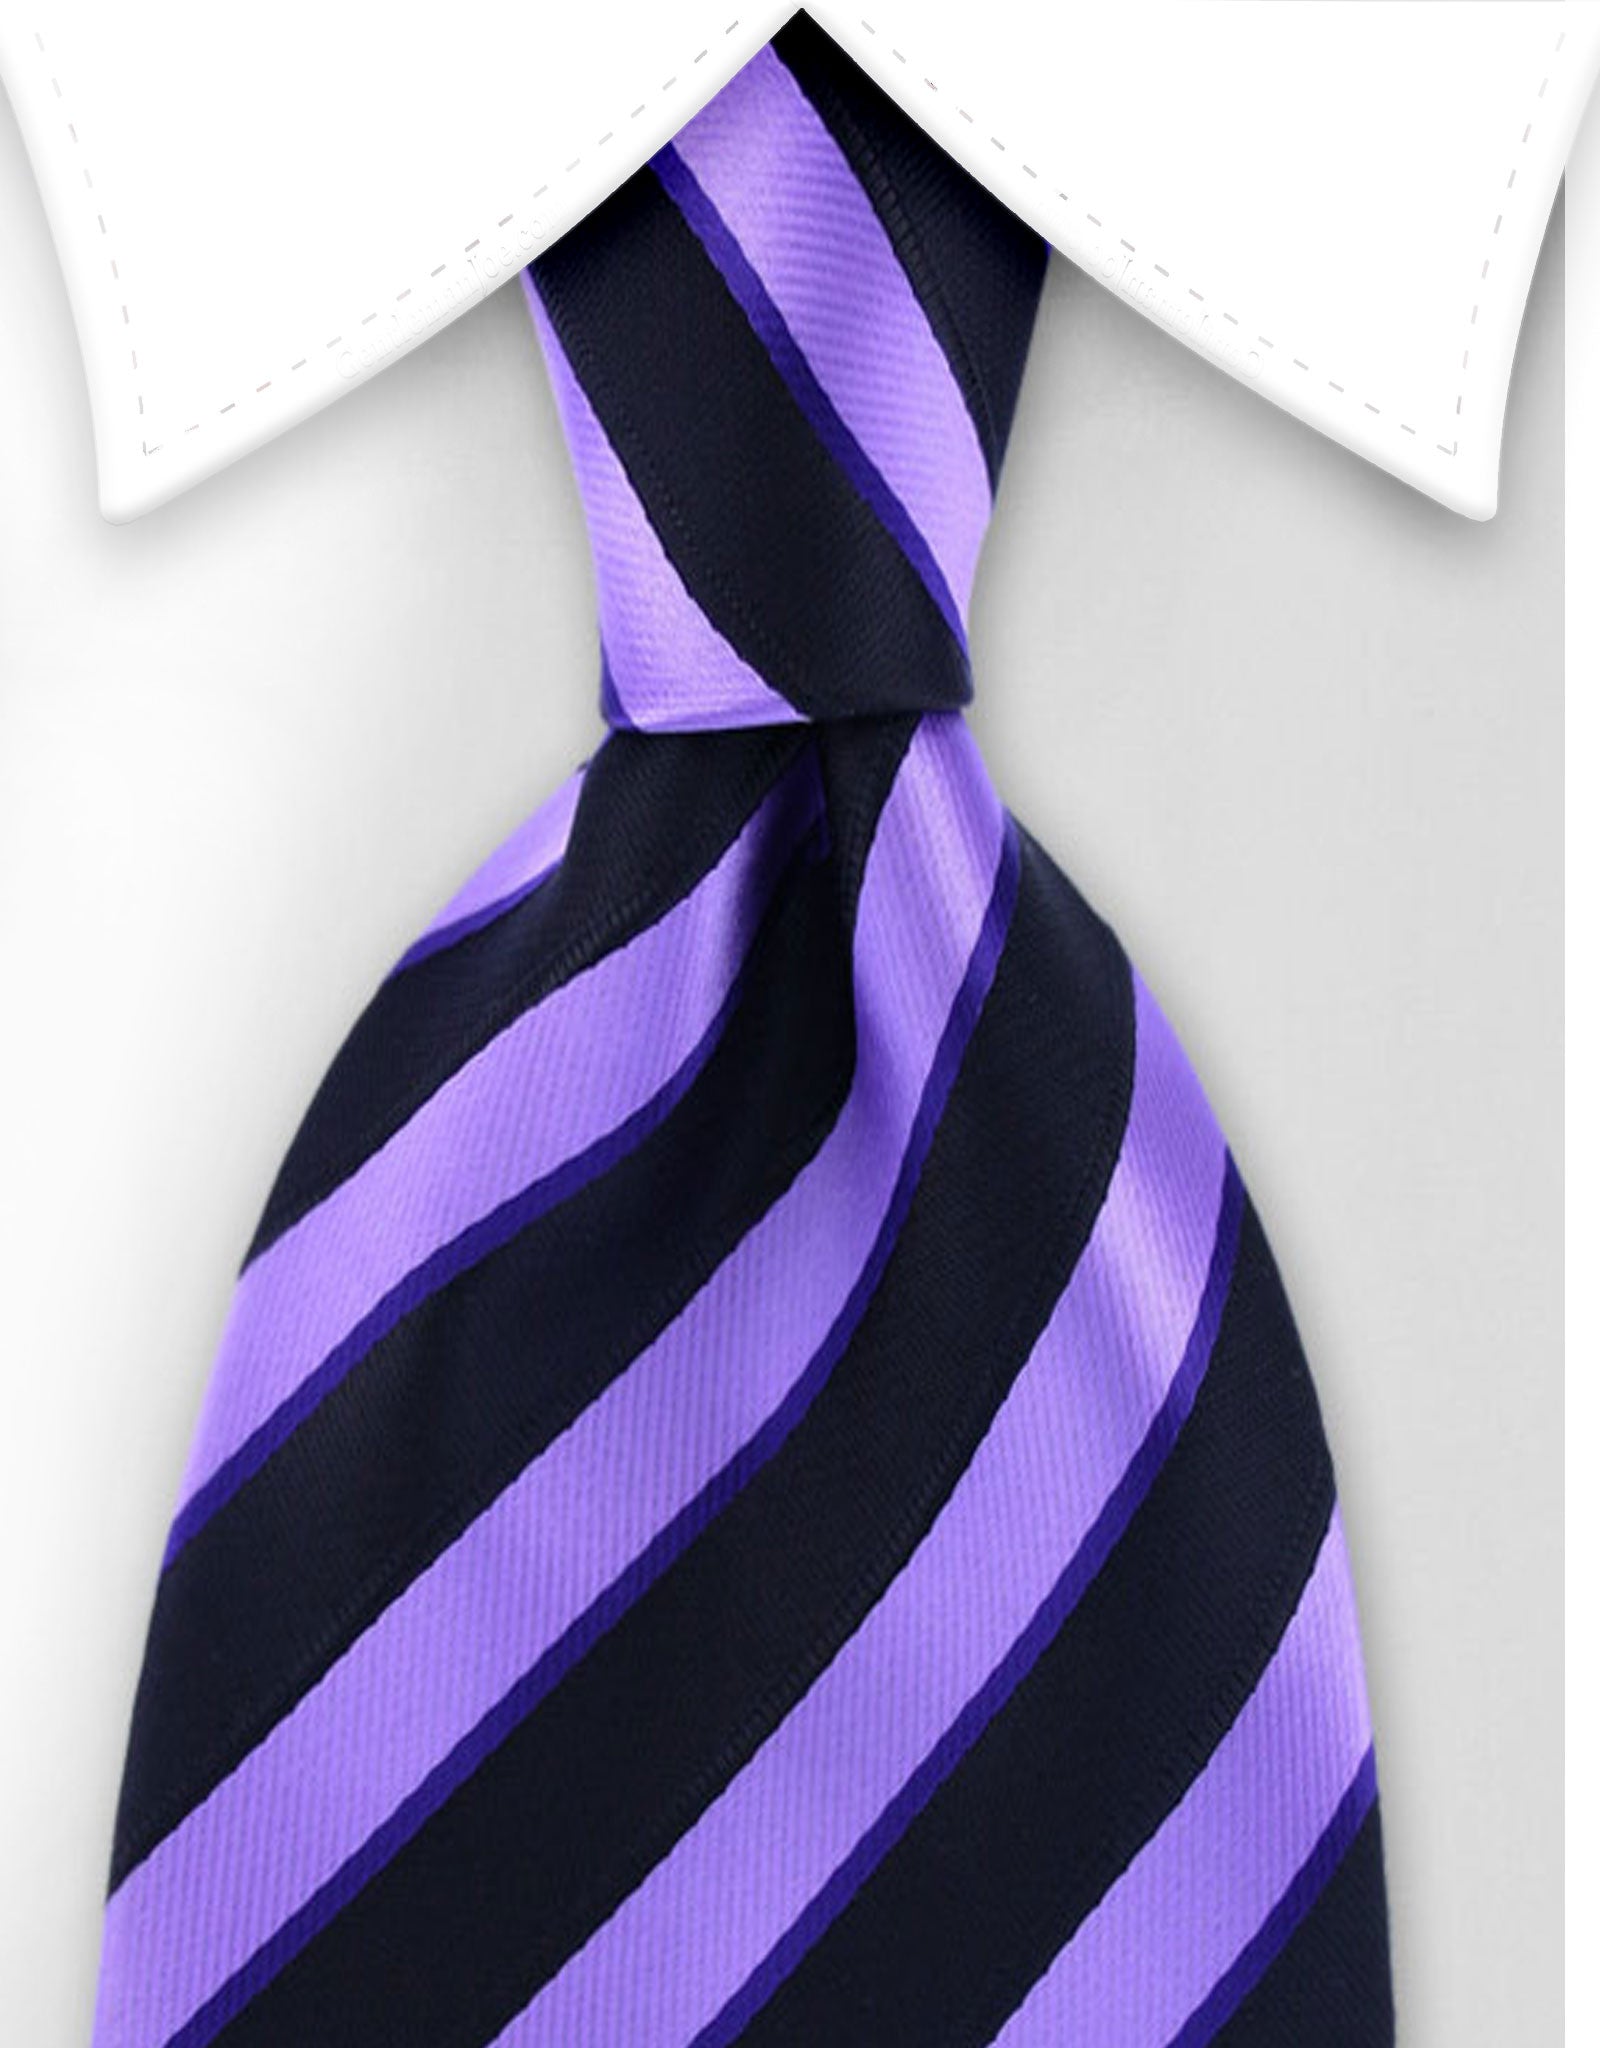 THOMPSON Stripe Grill Tie Clip In Purple Amethyst With Palladium